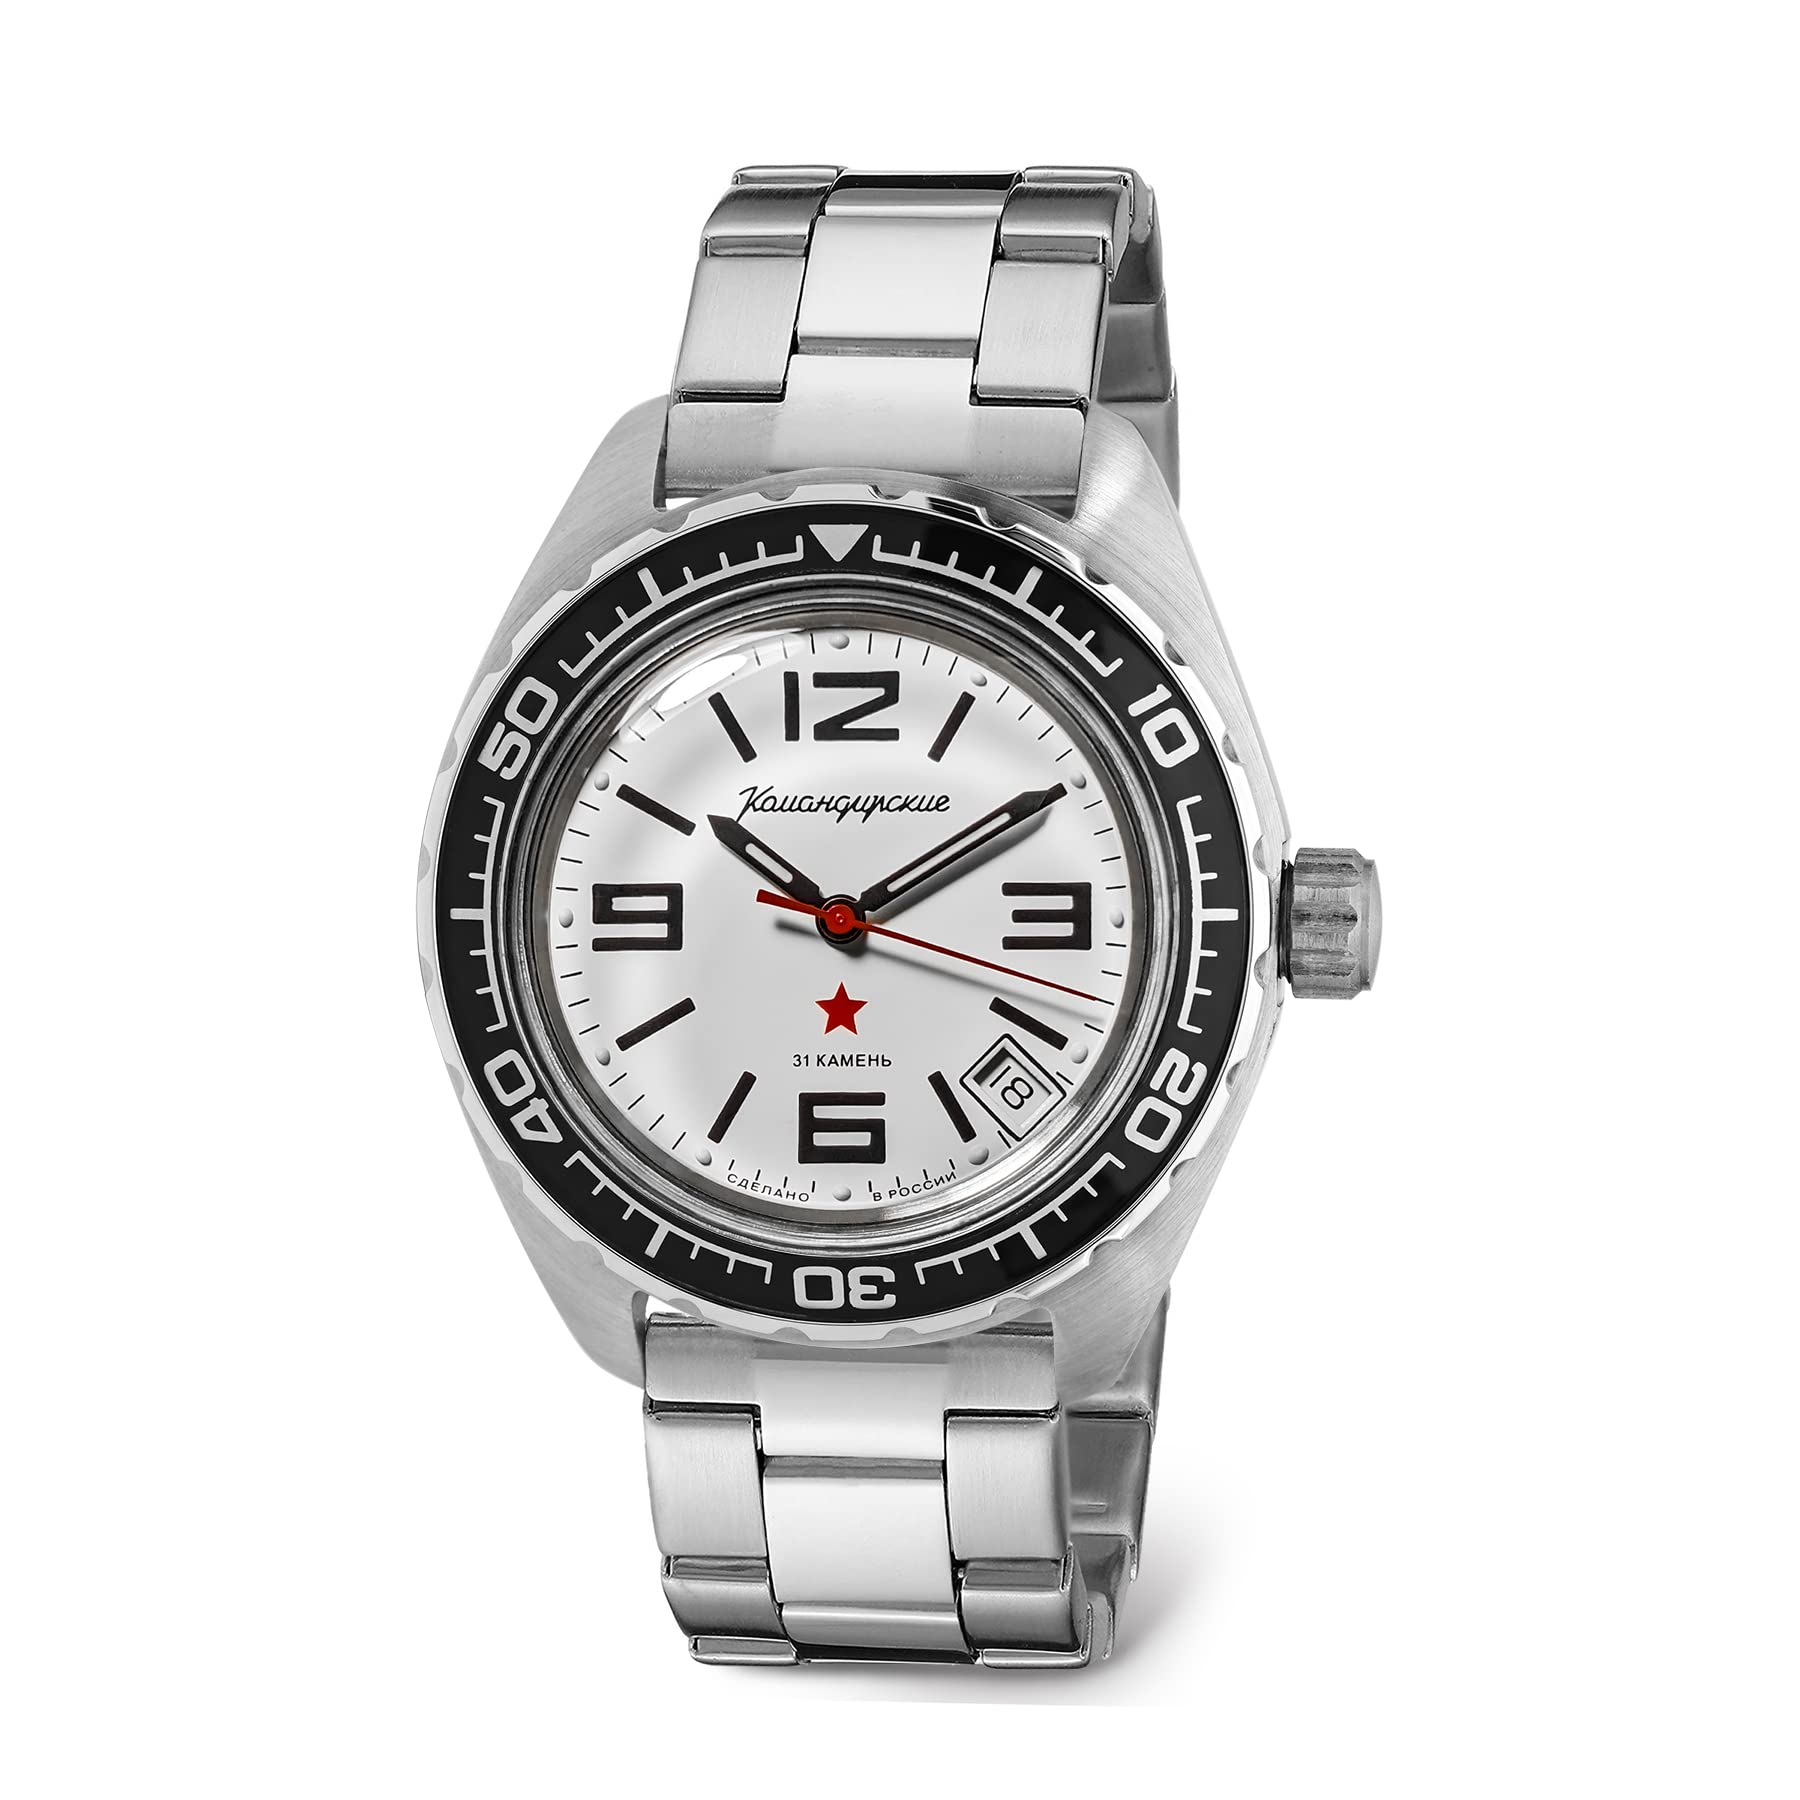 VOSTOK | Komandirskie 02K Automatic Self-Winding Russian Military Diver Wrist Watch | WR 200 m | Fashion | Business | Casual Men's Watches | Model 020716